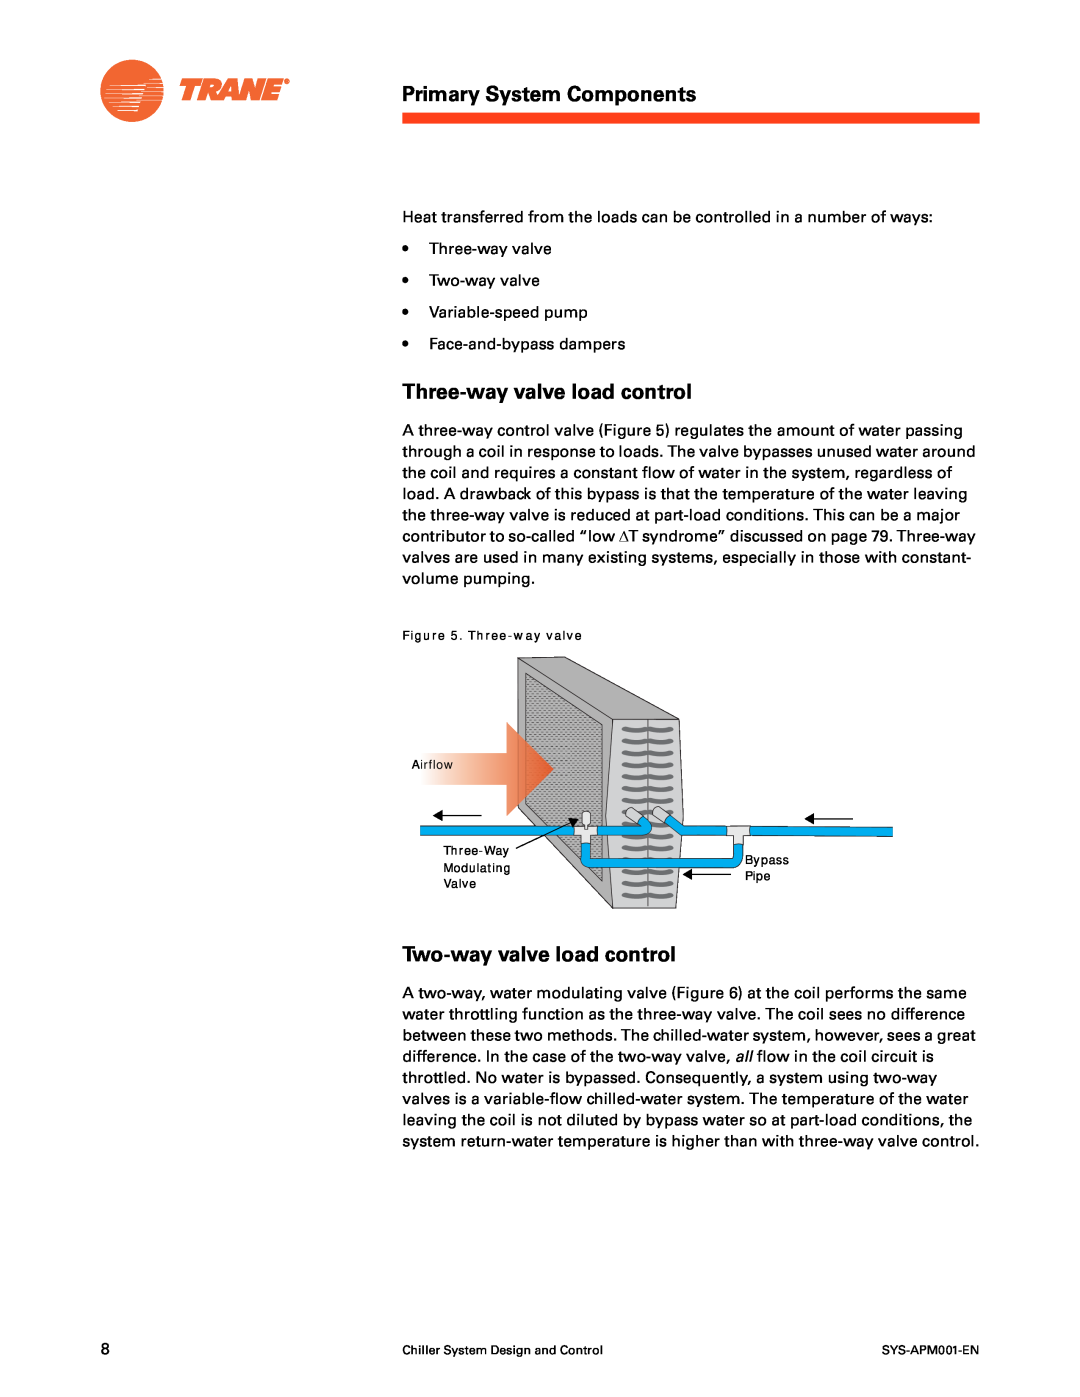 Trane SYS-APM001-EN manual Three-way valve load control, Two-way valve load control, Primary System Components 